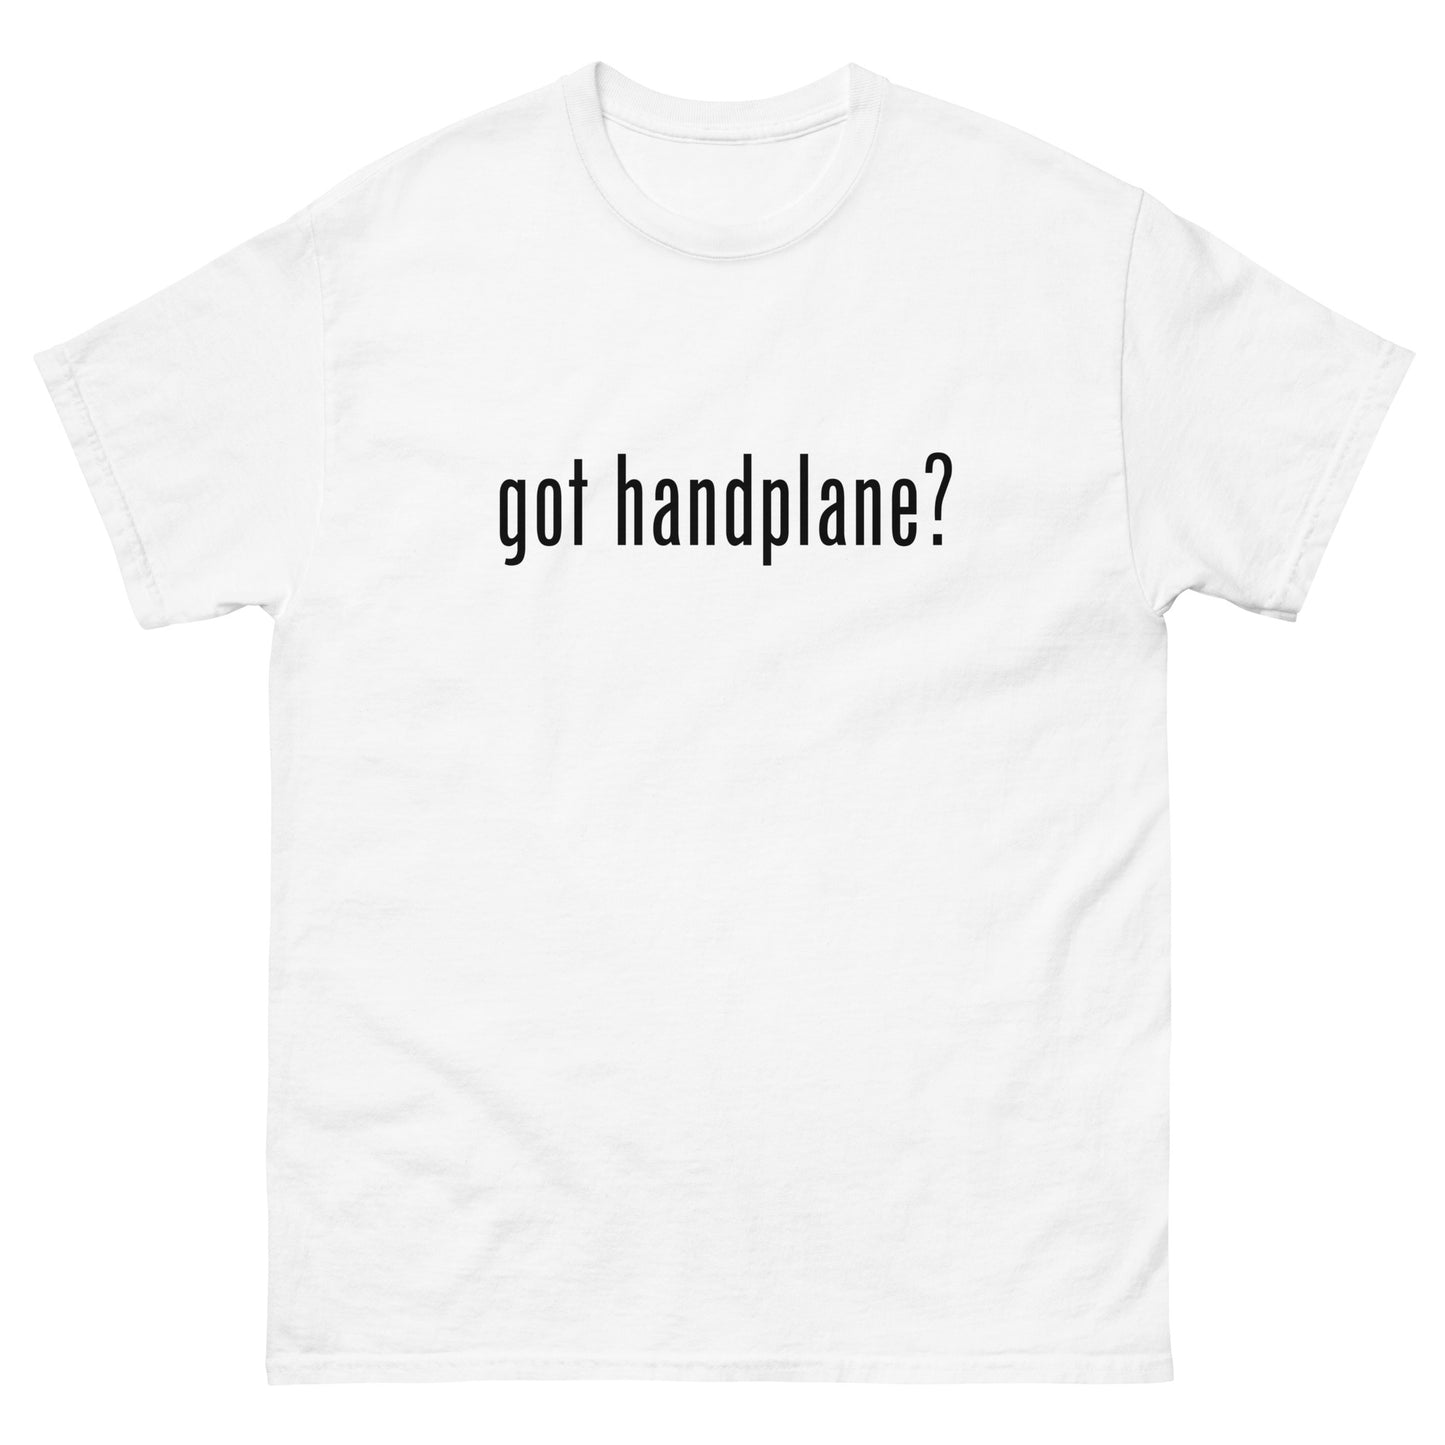 “got handplane?” Woodworking T Shirt – Black Ink (Multiple Colors)